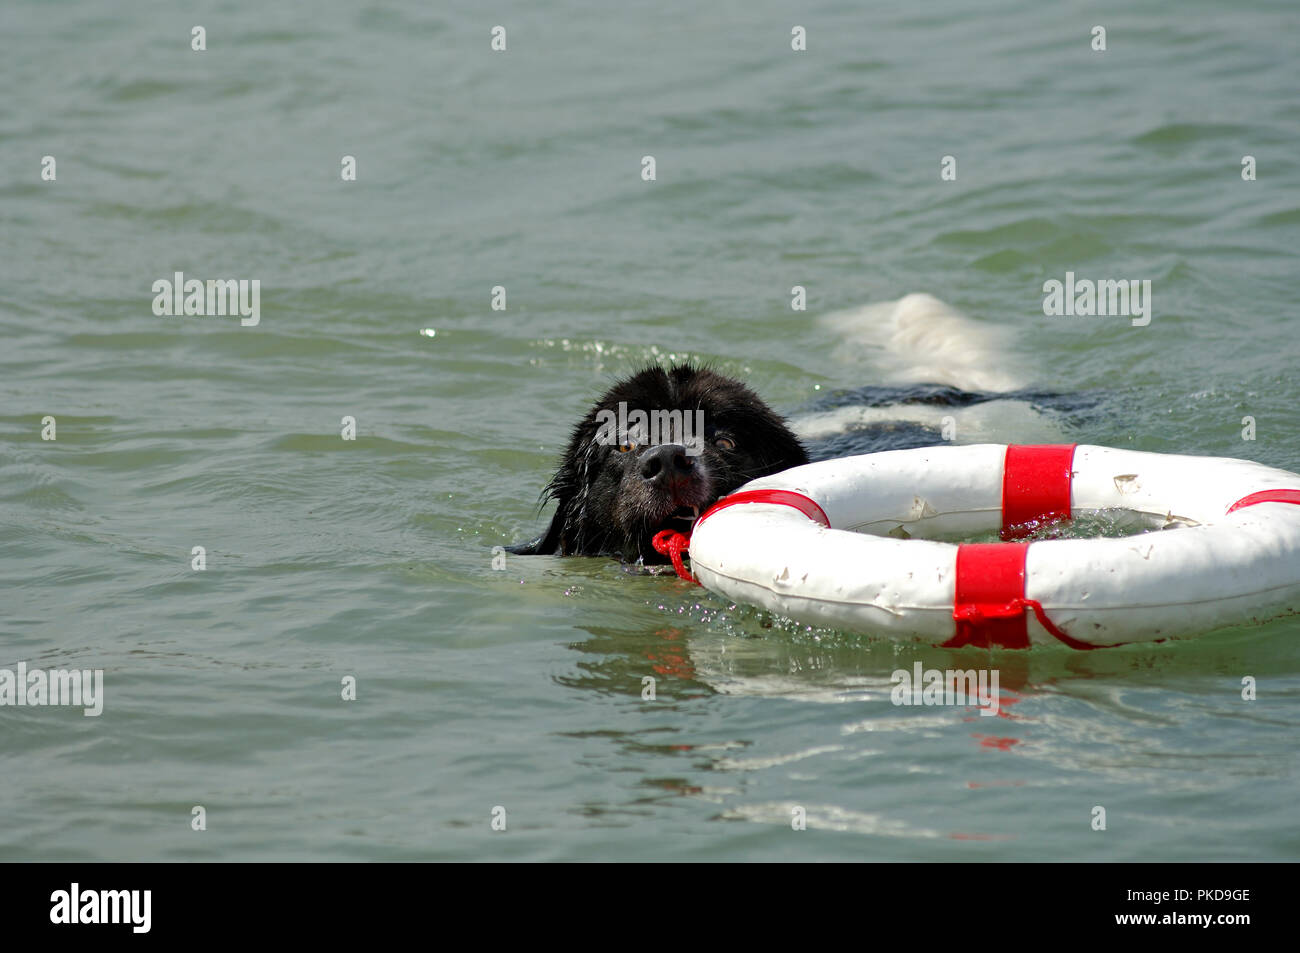 Neufundland - Schwimmen mit Boje - Rettung Canis familiaris) Saint-Jean-Nageant avec bouée - Sauvetage Stockfoto